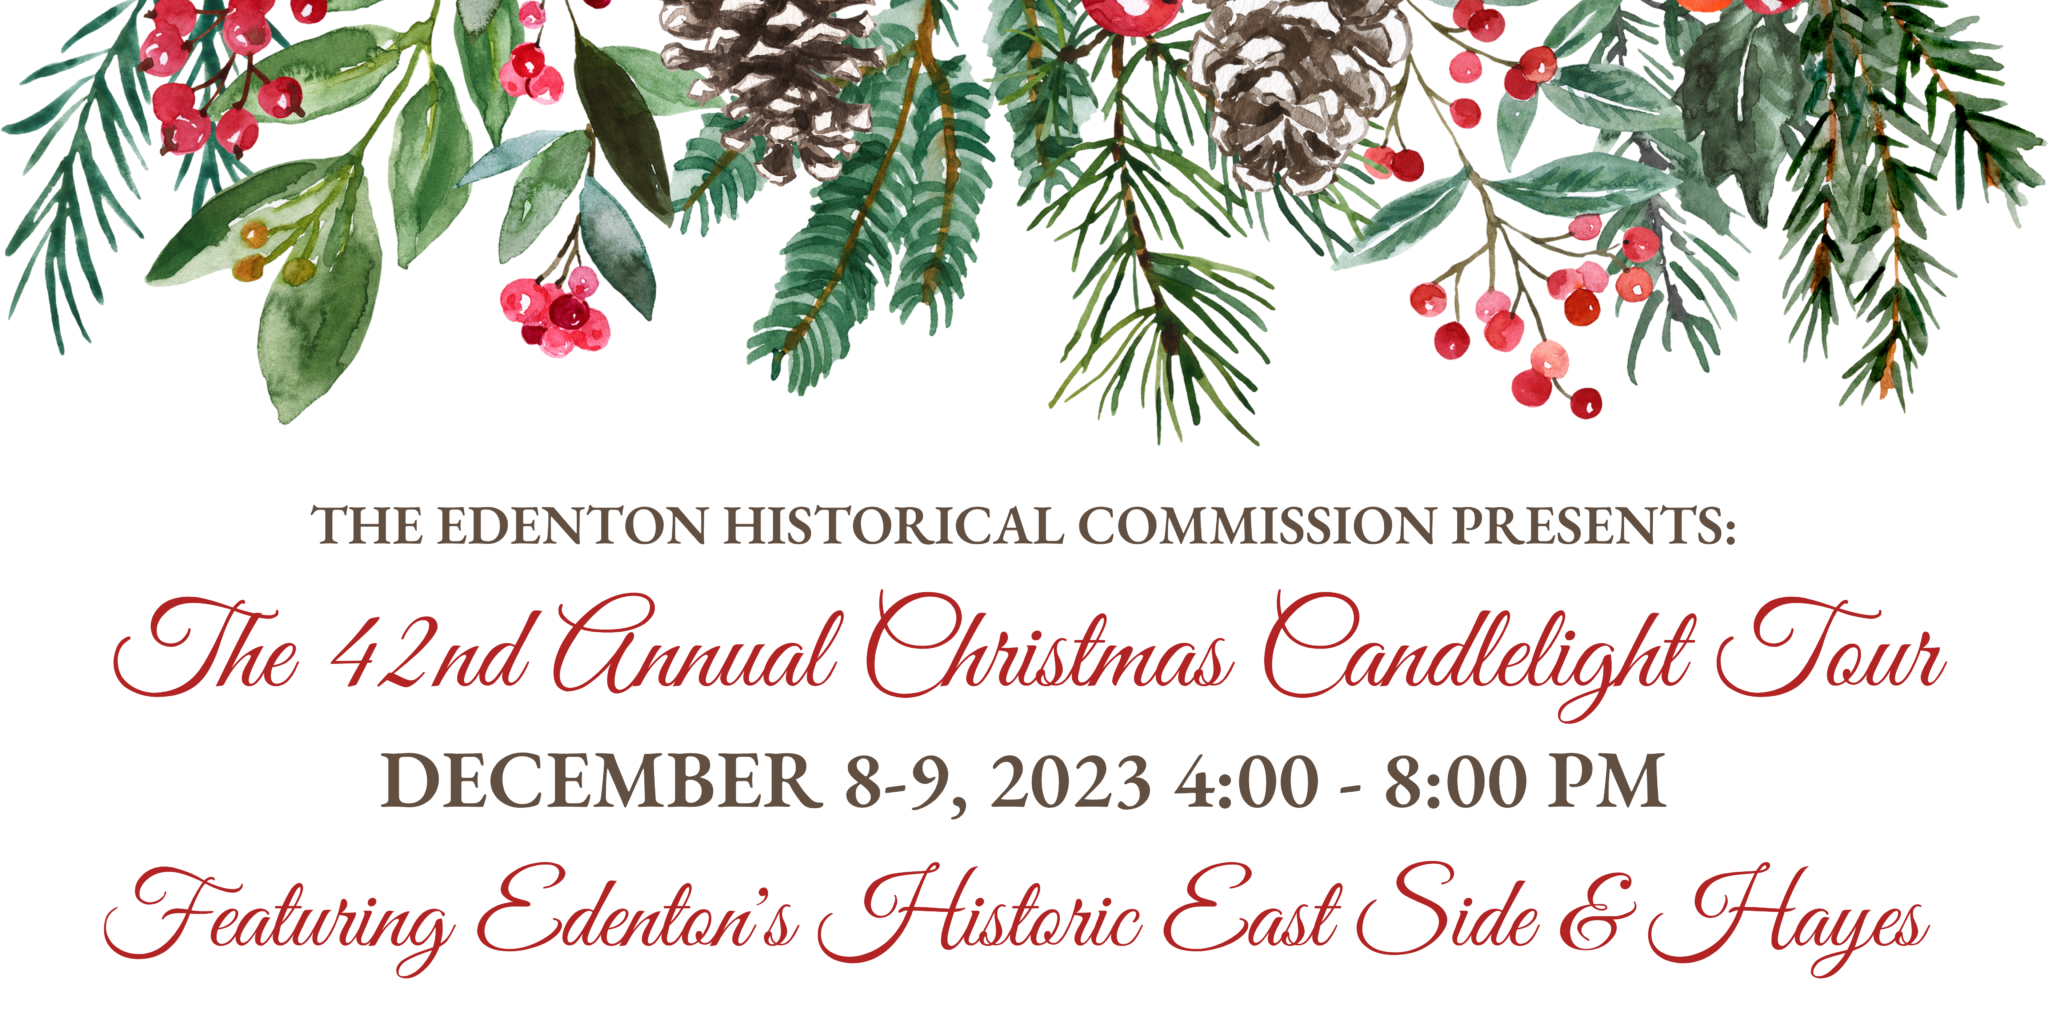 Christmas Candlelight Tour Edenton Historical Commission